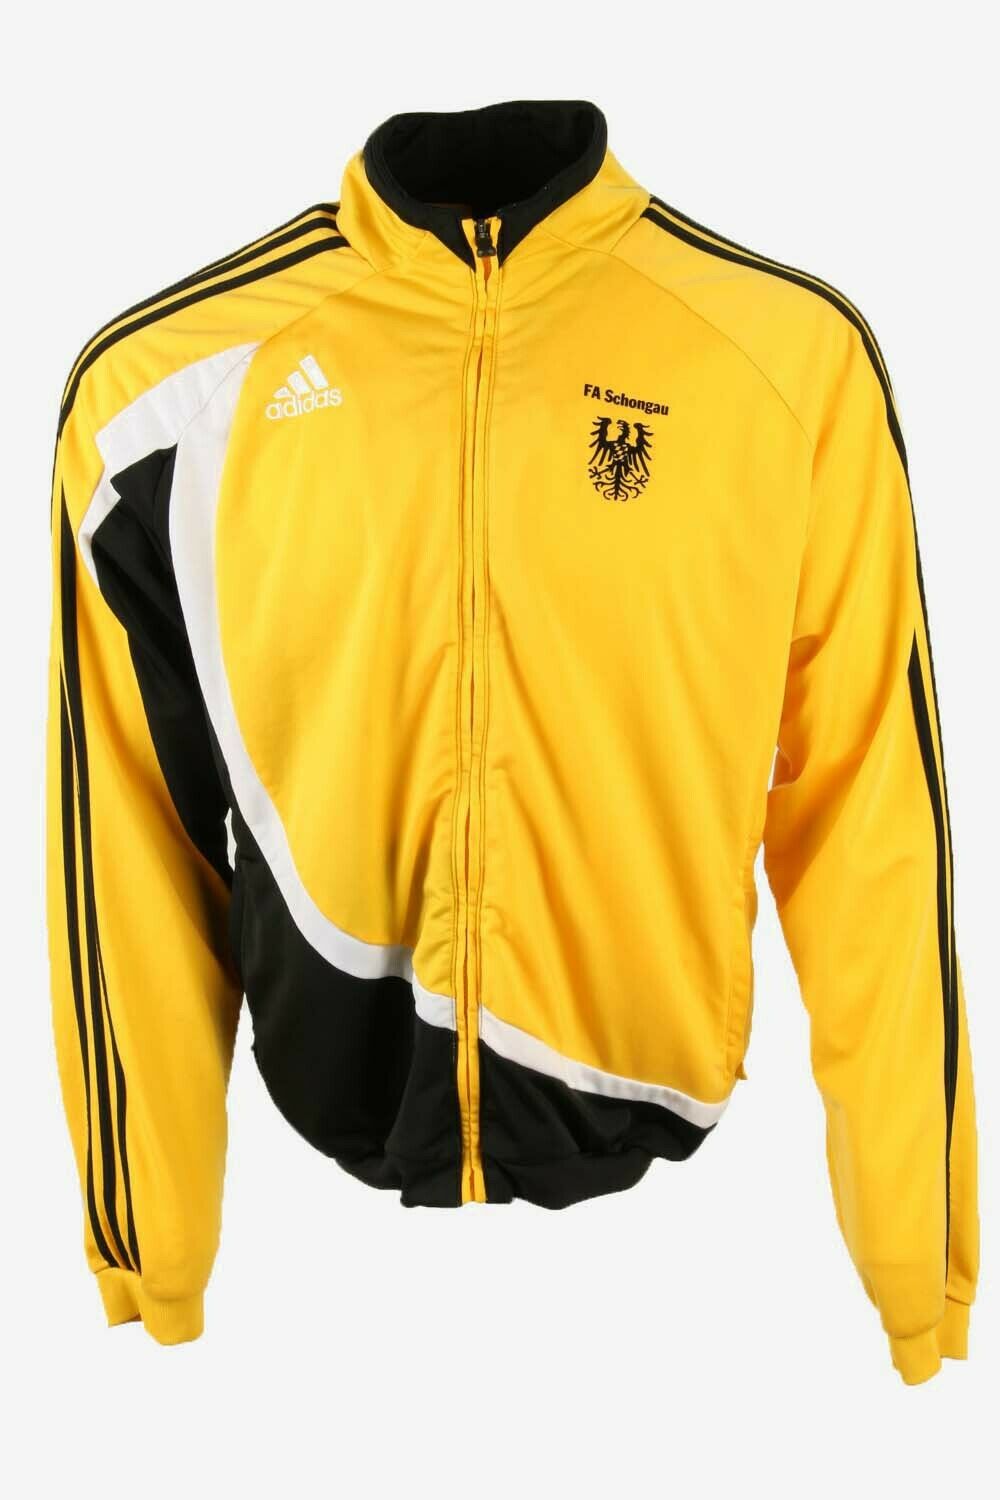 adidas Track Jacket In Yellow | Latest fashion clothes, Adidas track jacket,  Jackets